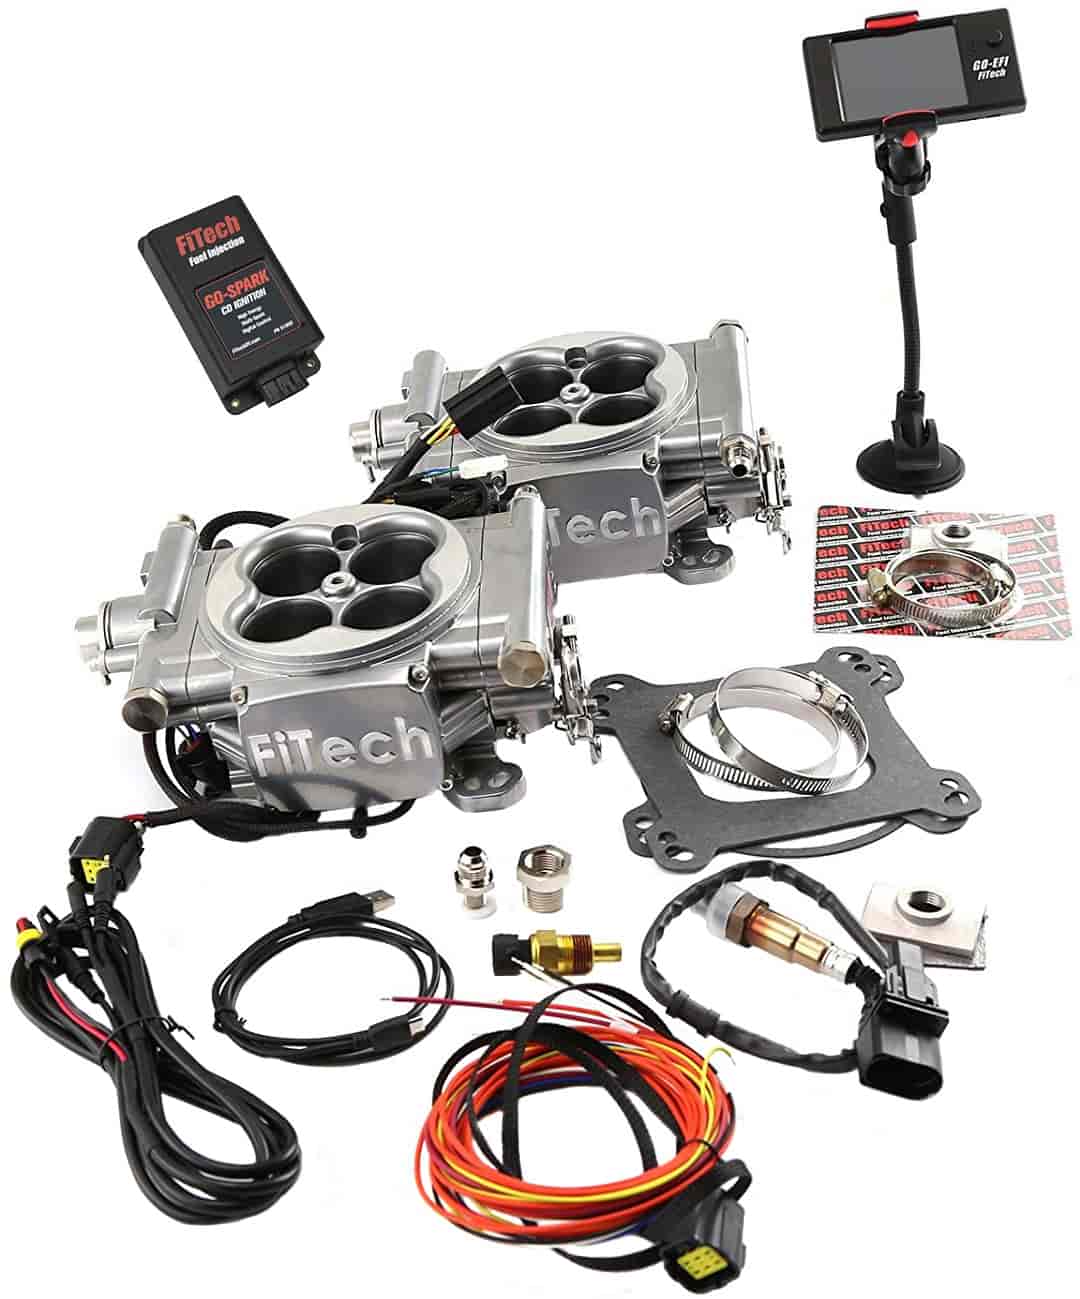 Go EFI 2x4 625 HP Dual Quad Throttle Body Fuel Injection Master Kit [with CDI Box] Bright Aluminum